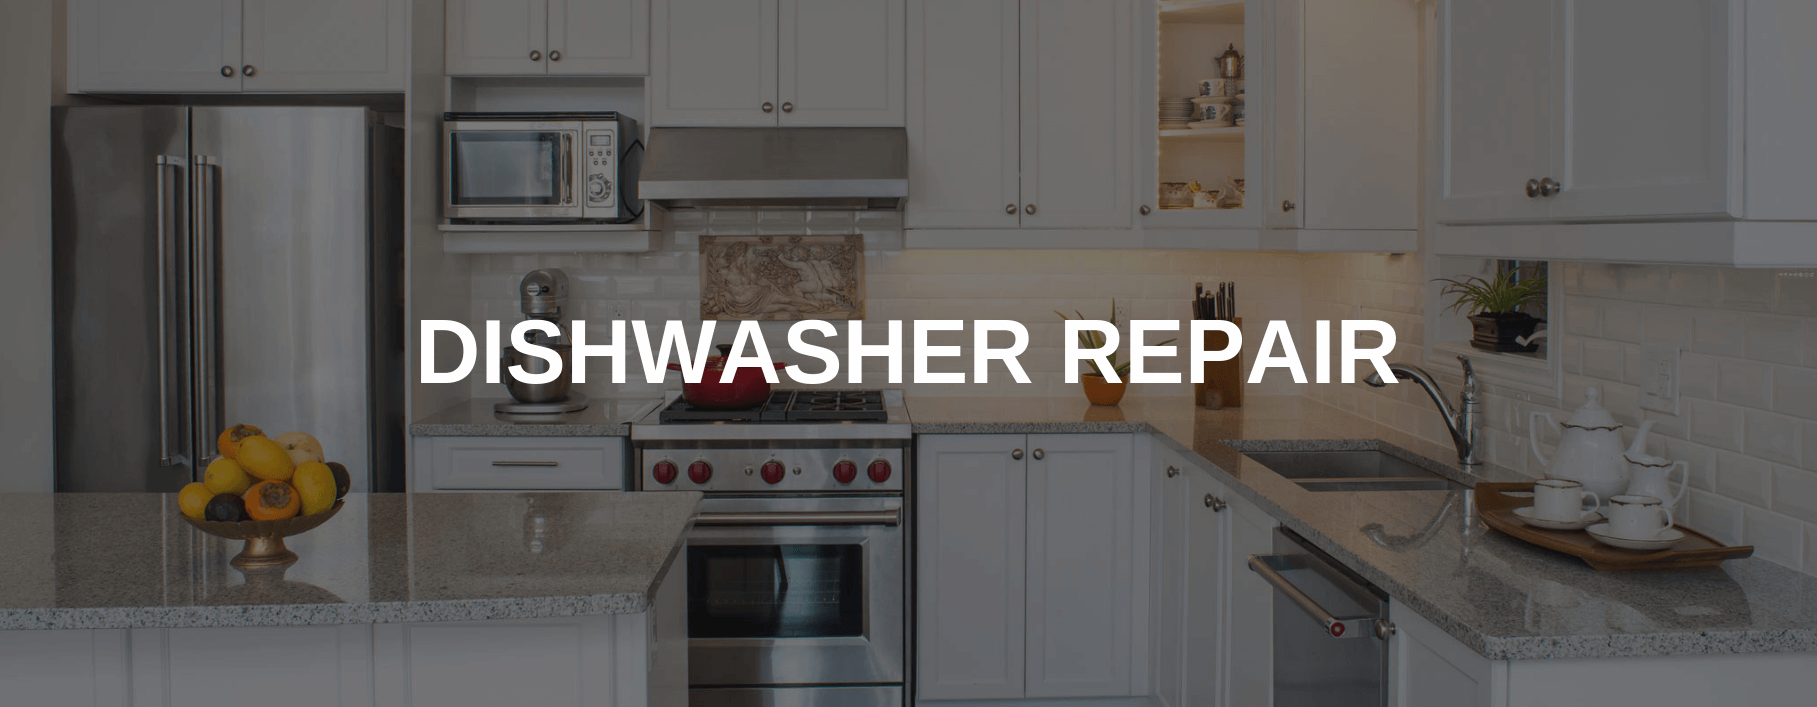 dishwasher repair concord